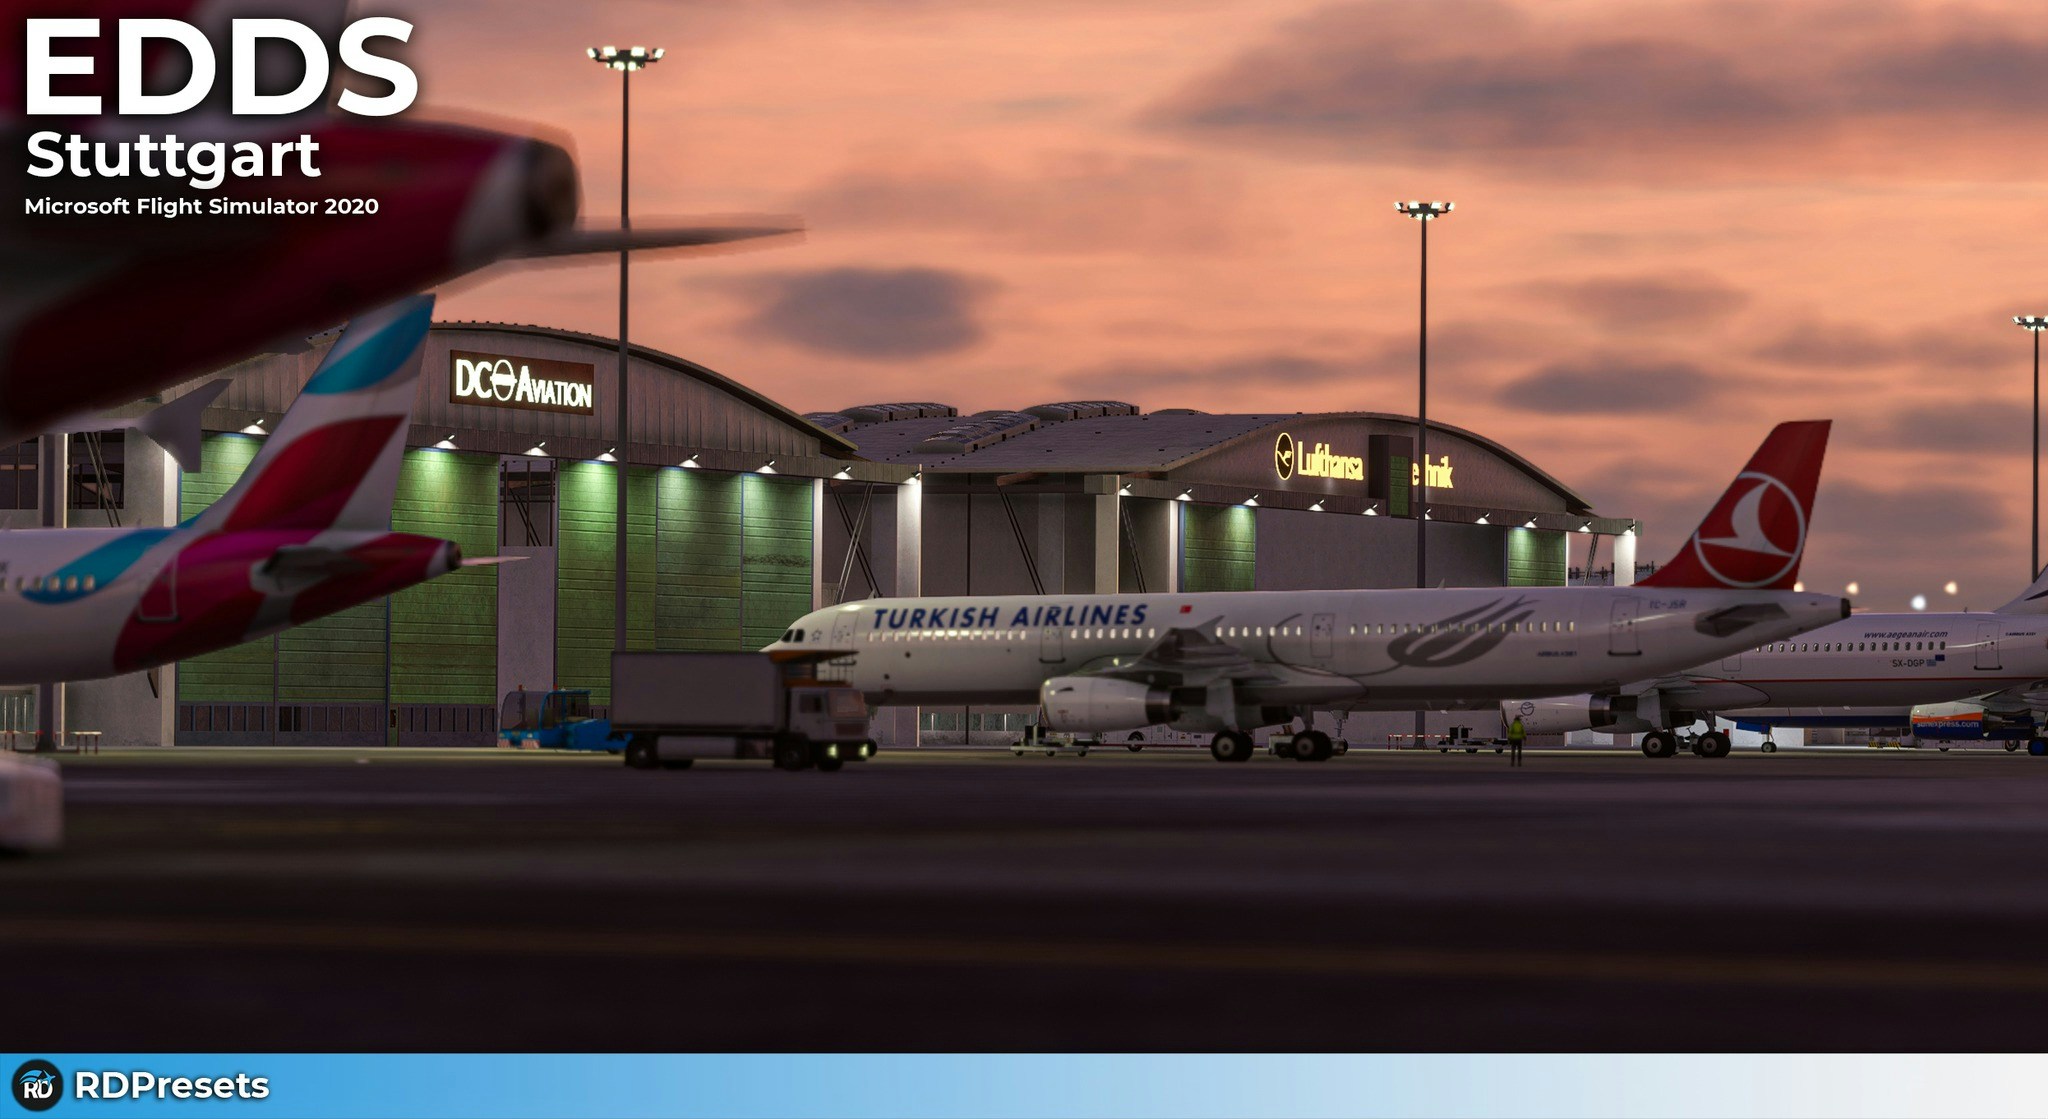 New flight simulator lands at Montreal airport